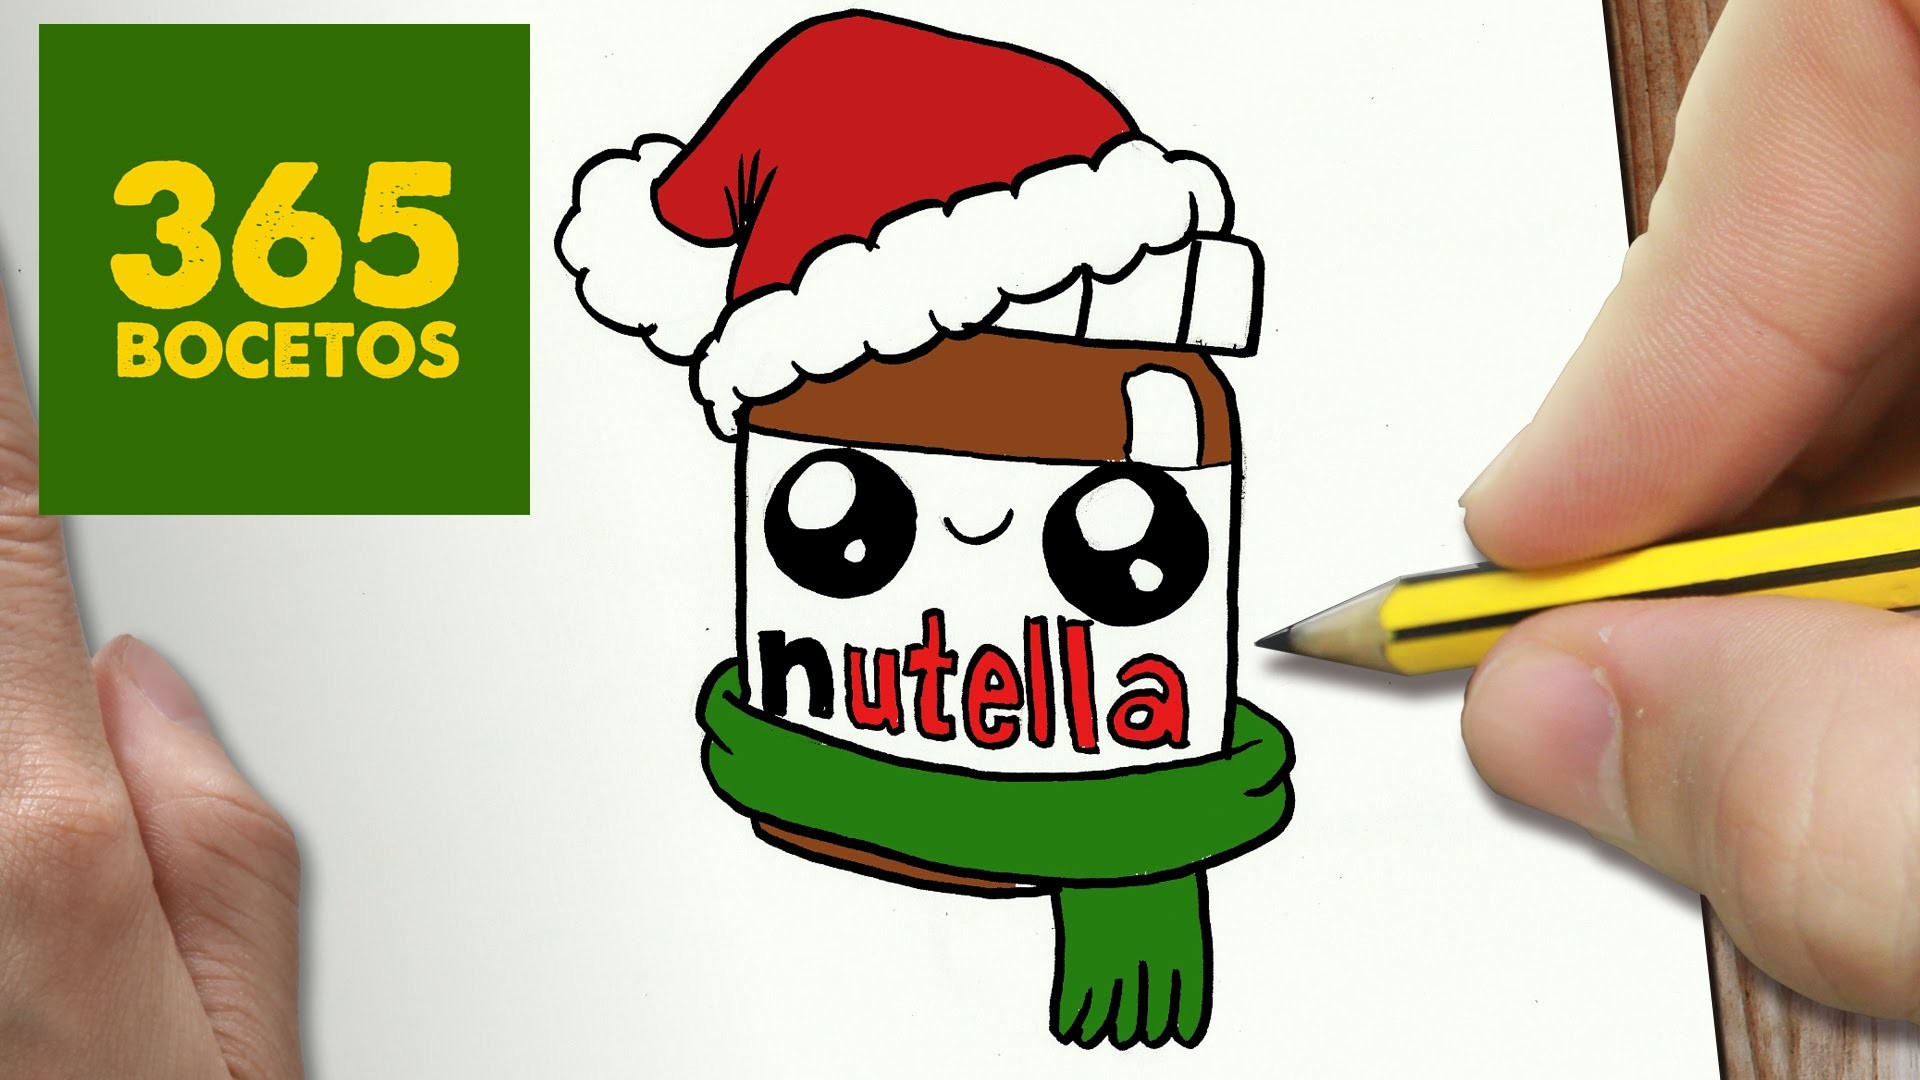 COMO DIBUJAR UN NUTELLA PARA NAVIDAD PASO A PASO: Dibujos kawaii navideños - How to draw a nutella